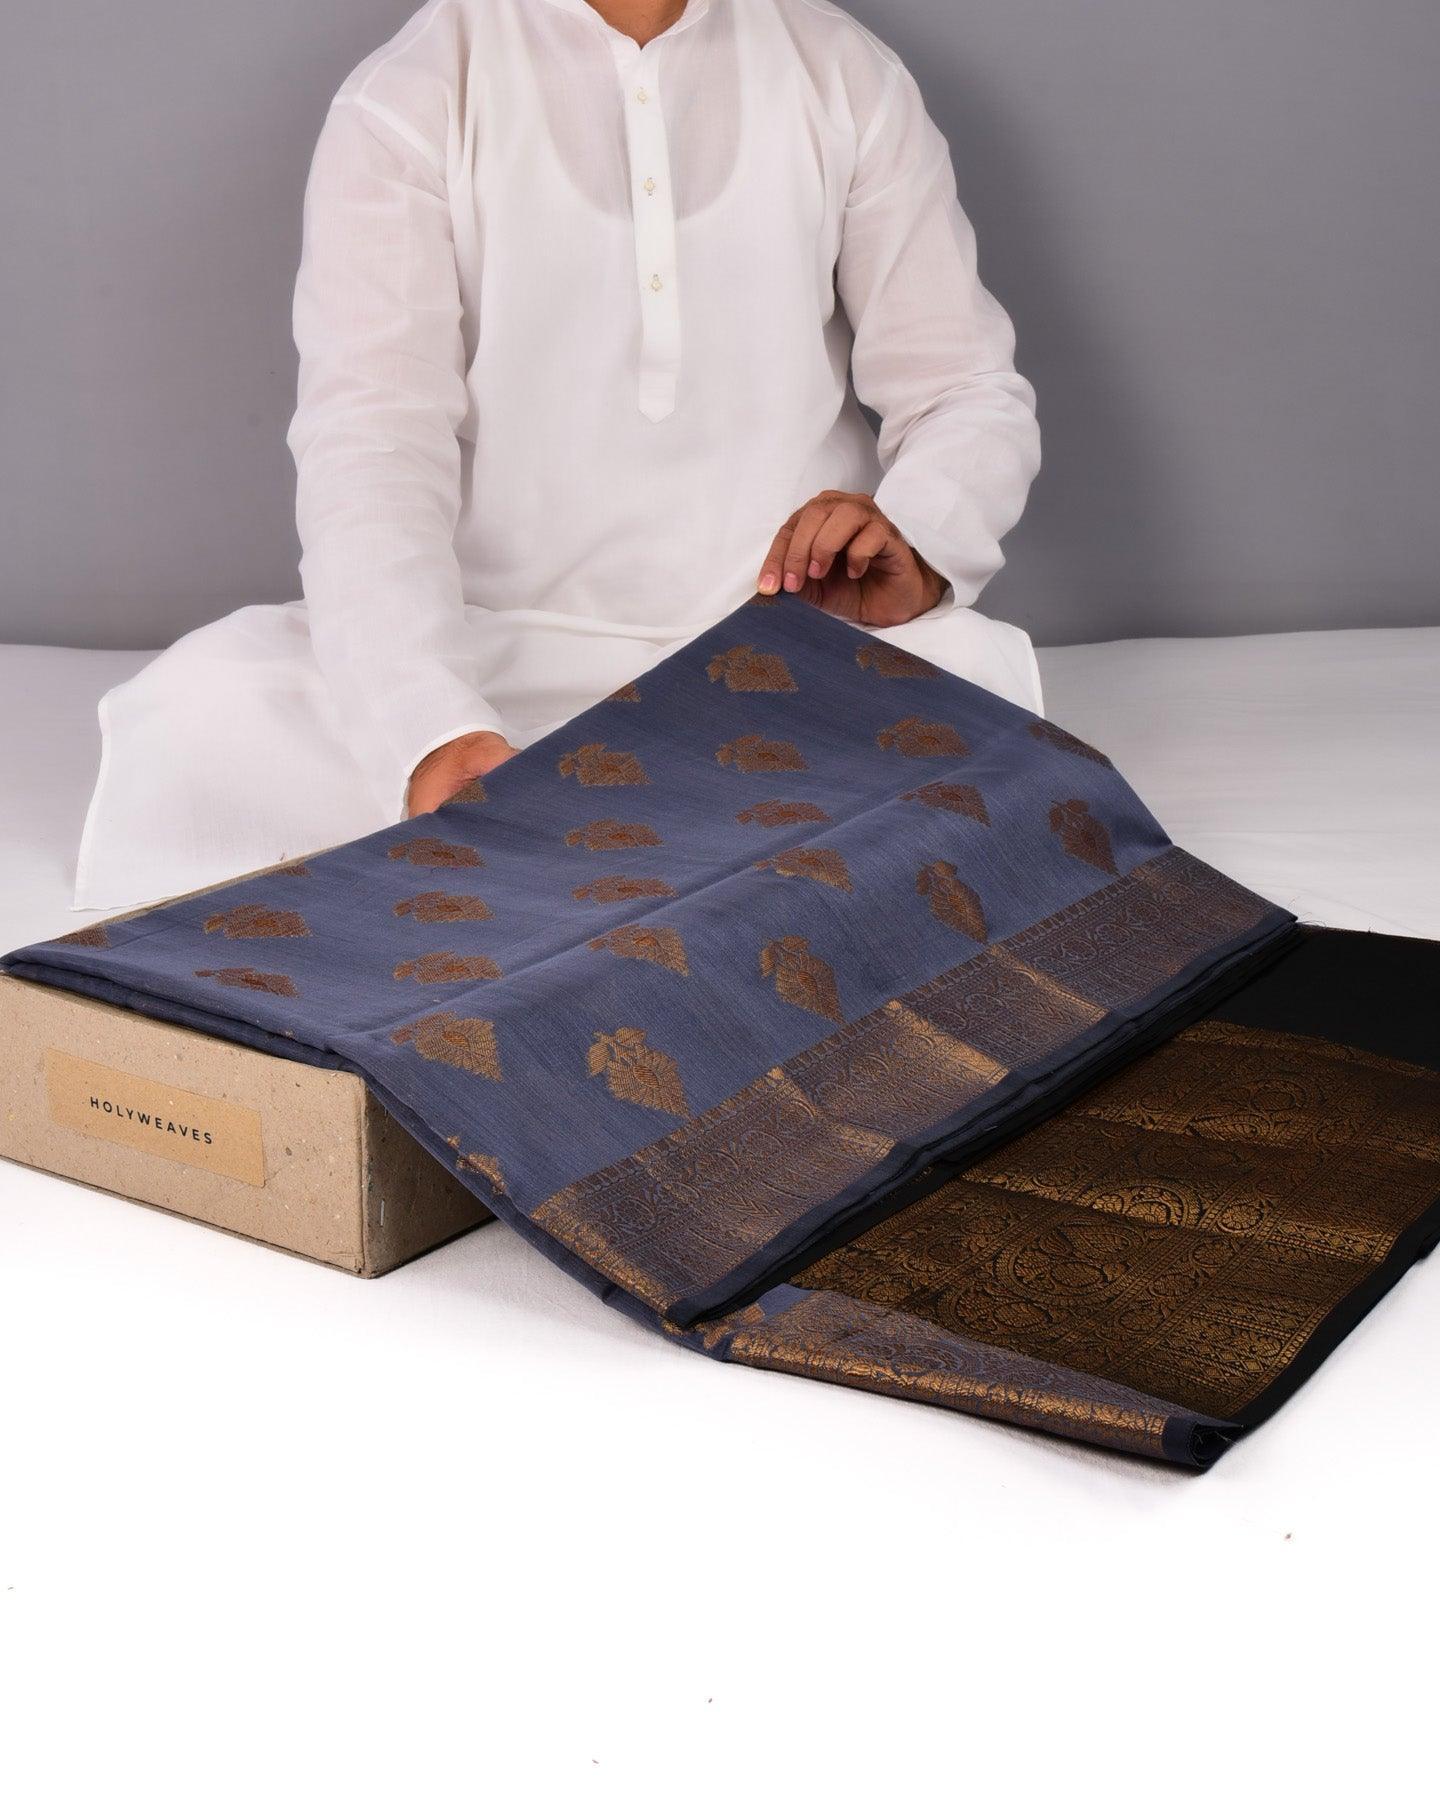 Marengo Gray Banarasi Antique Zari Cutwork Brocade Woven Cotton Silk Saree with Black Brocade Blouse Piece - By HolyWeaves, Benares